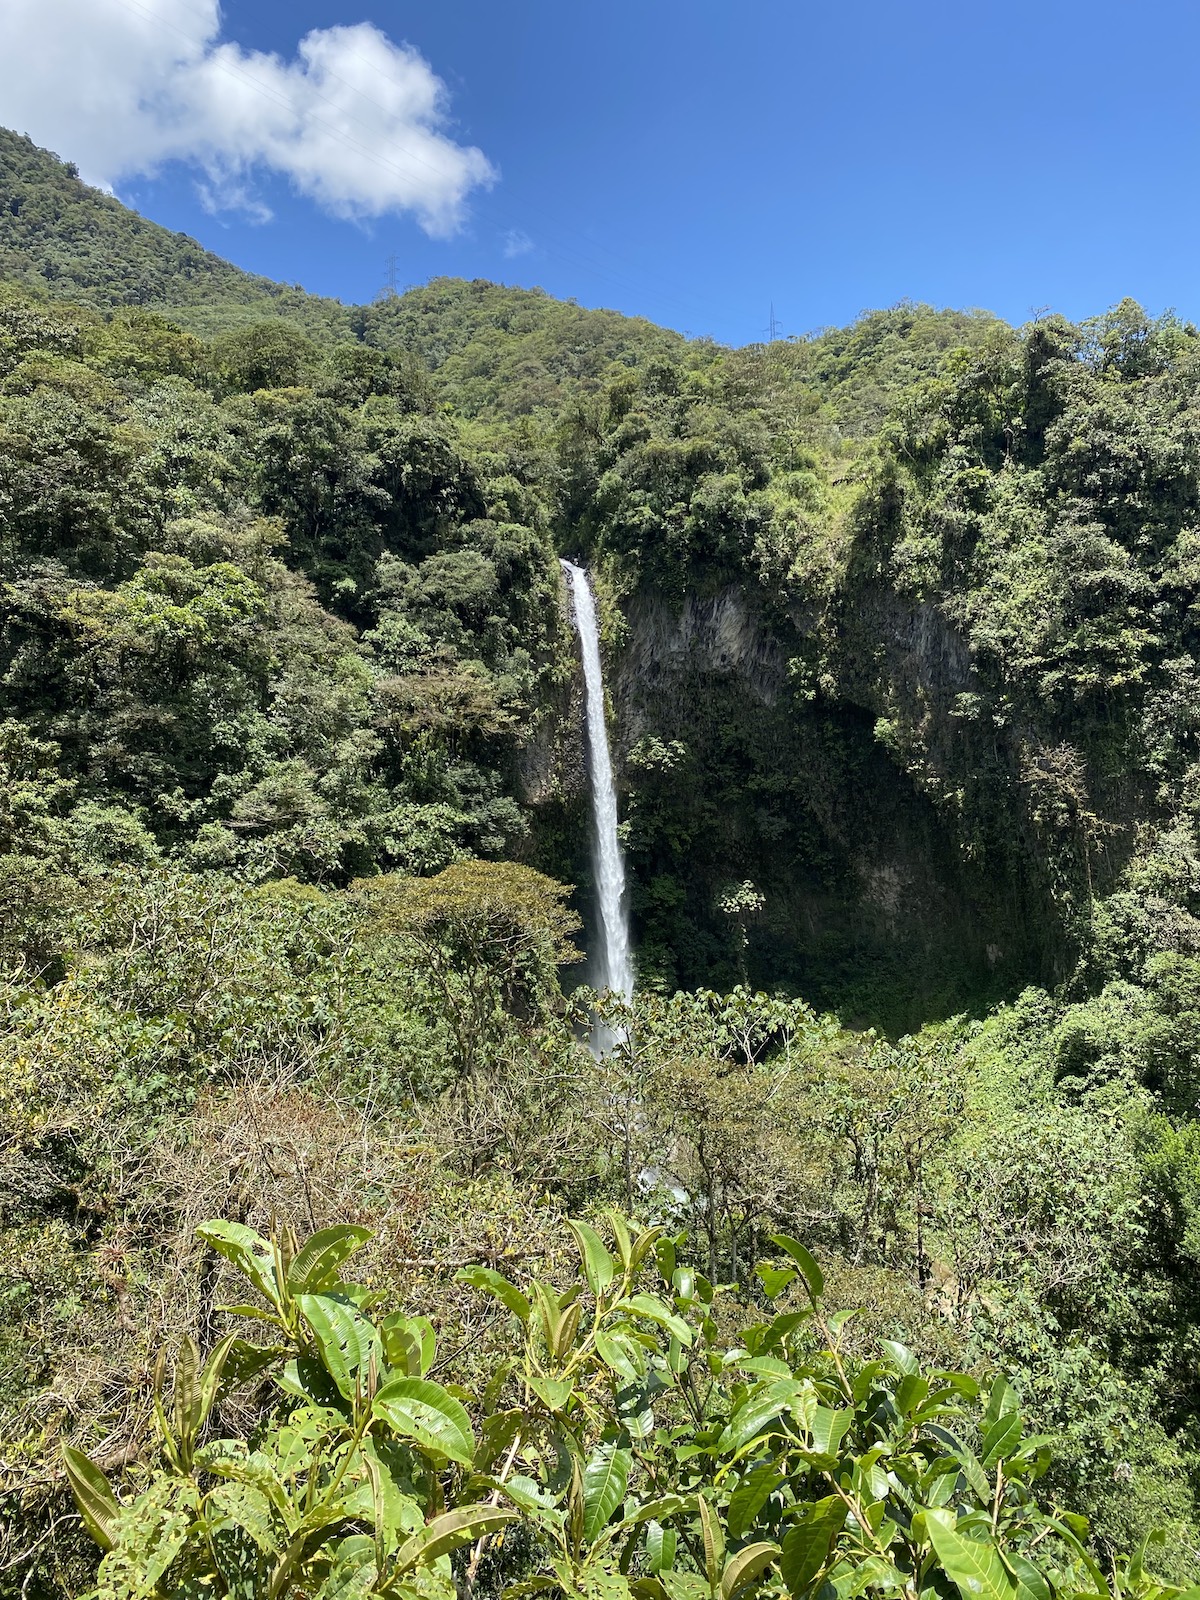 Machay Waterfall in Banos, Ecuador